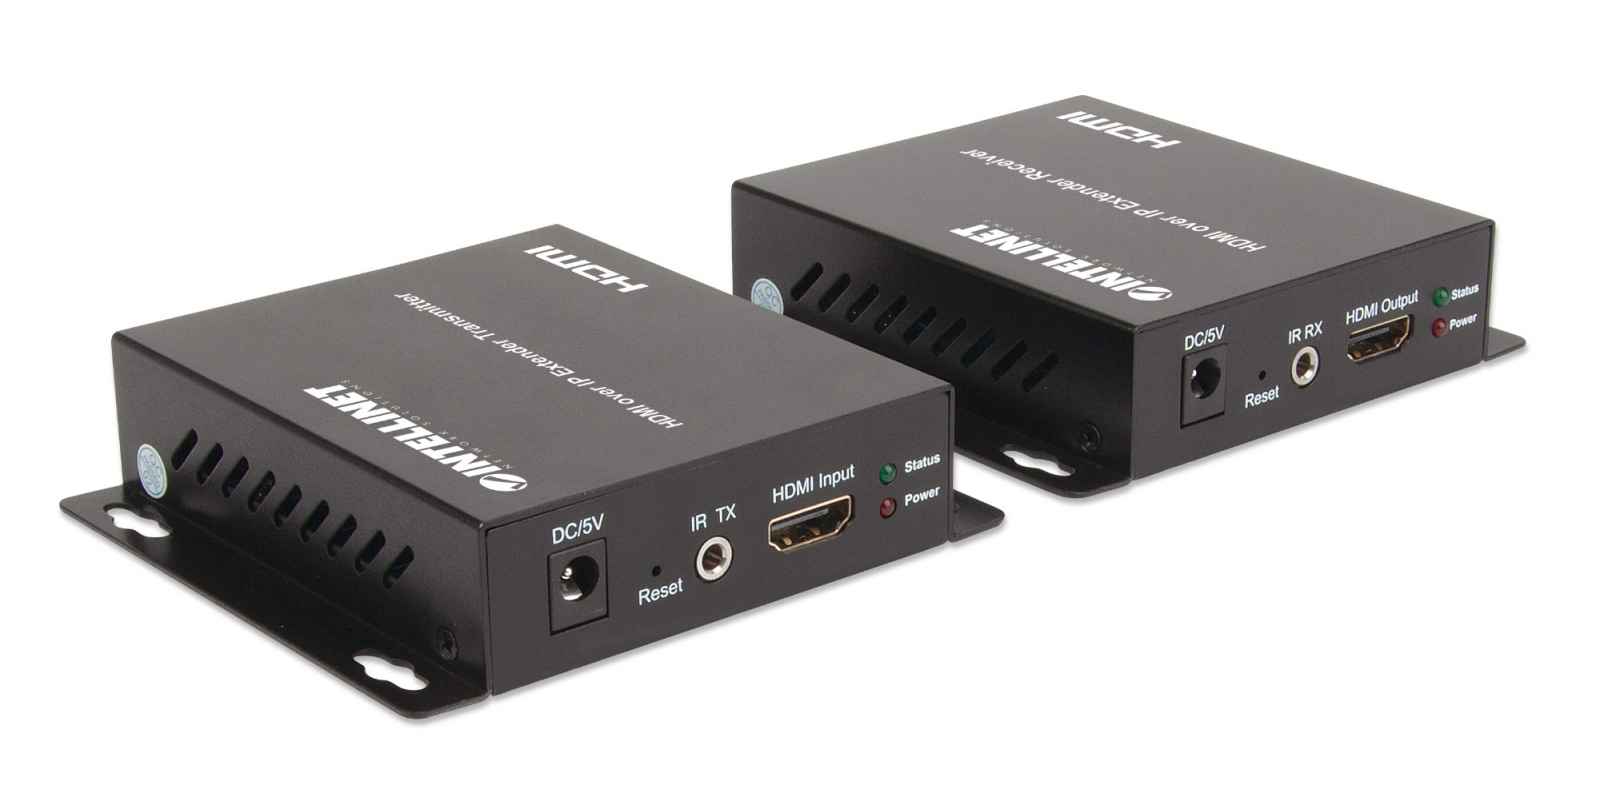 Extensor multiplicador HDMI por cable UTP a través de LAN Tx y Rx - Hiper  Electrón